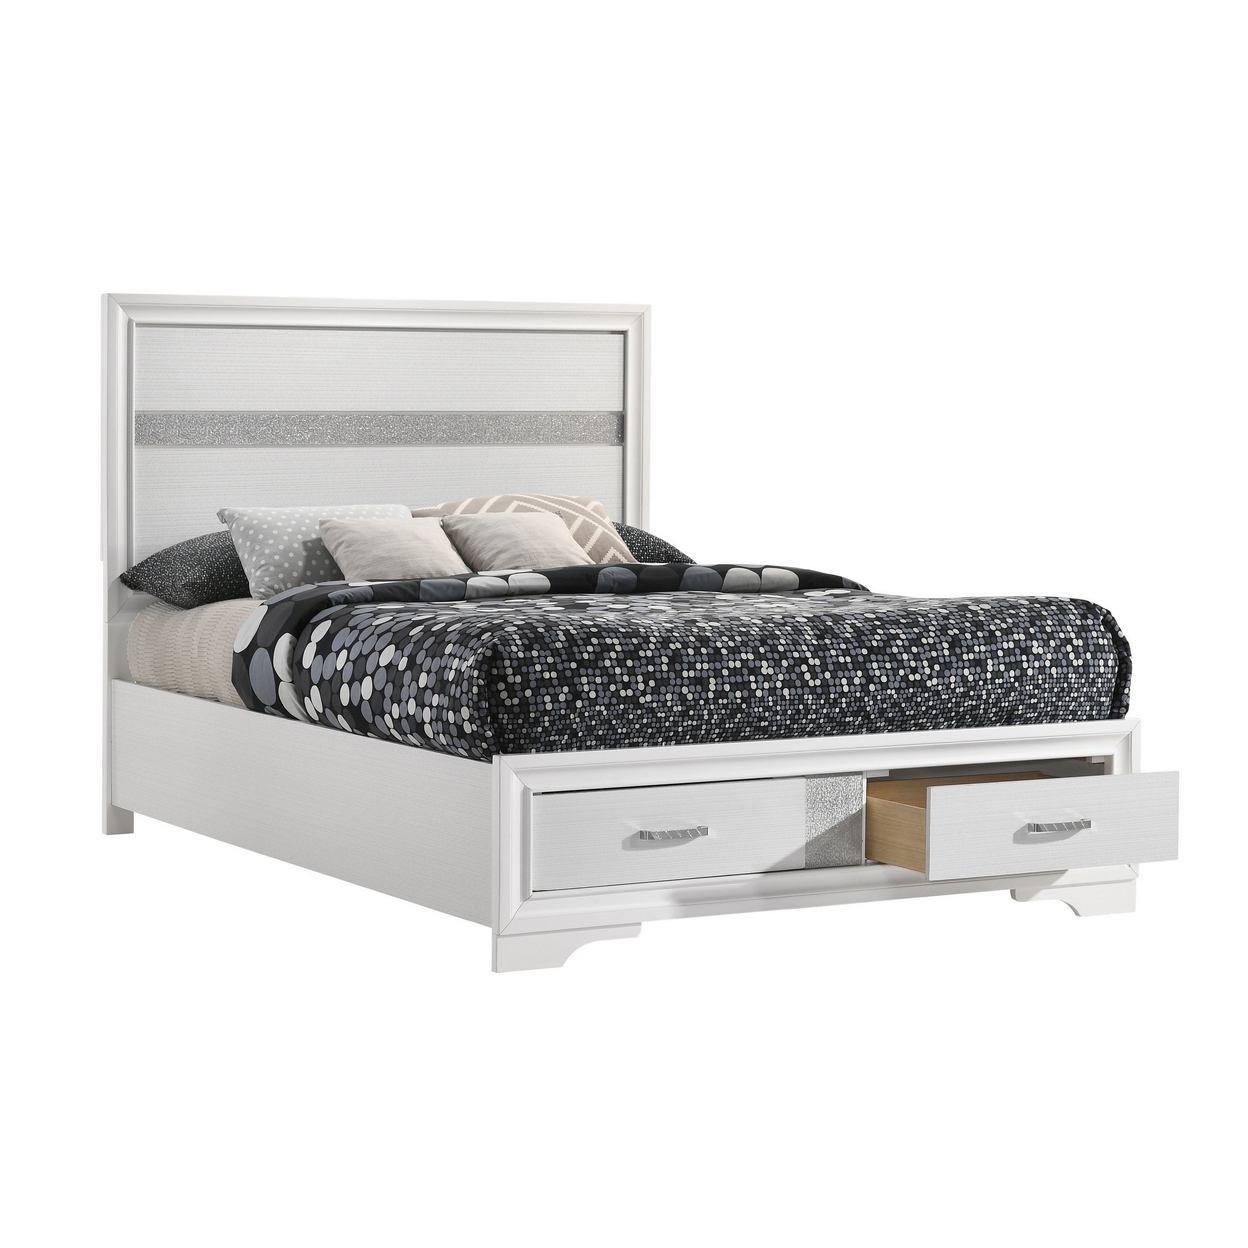 Vino Full Size Panel Bed With 2 Storage Drawers, Acrylic Glitter, White- Saltoro Sherpi